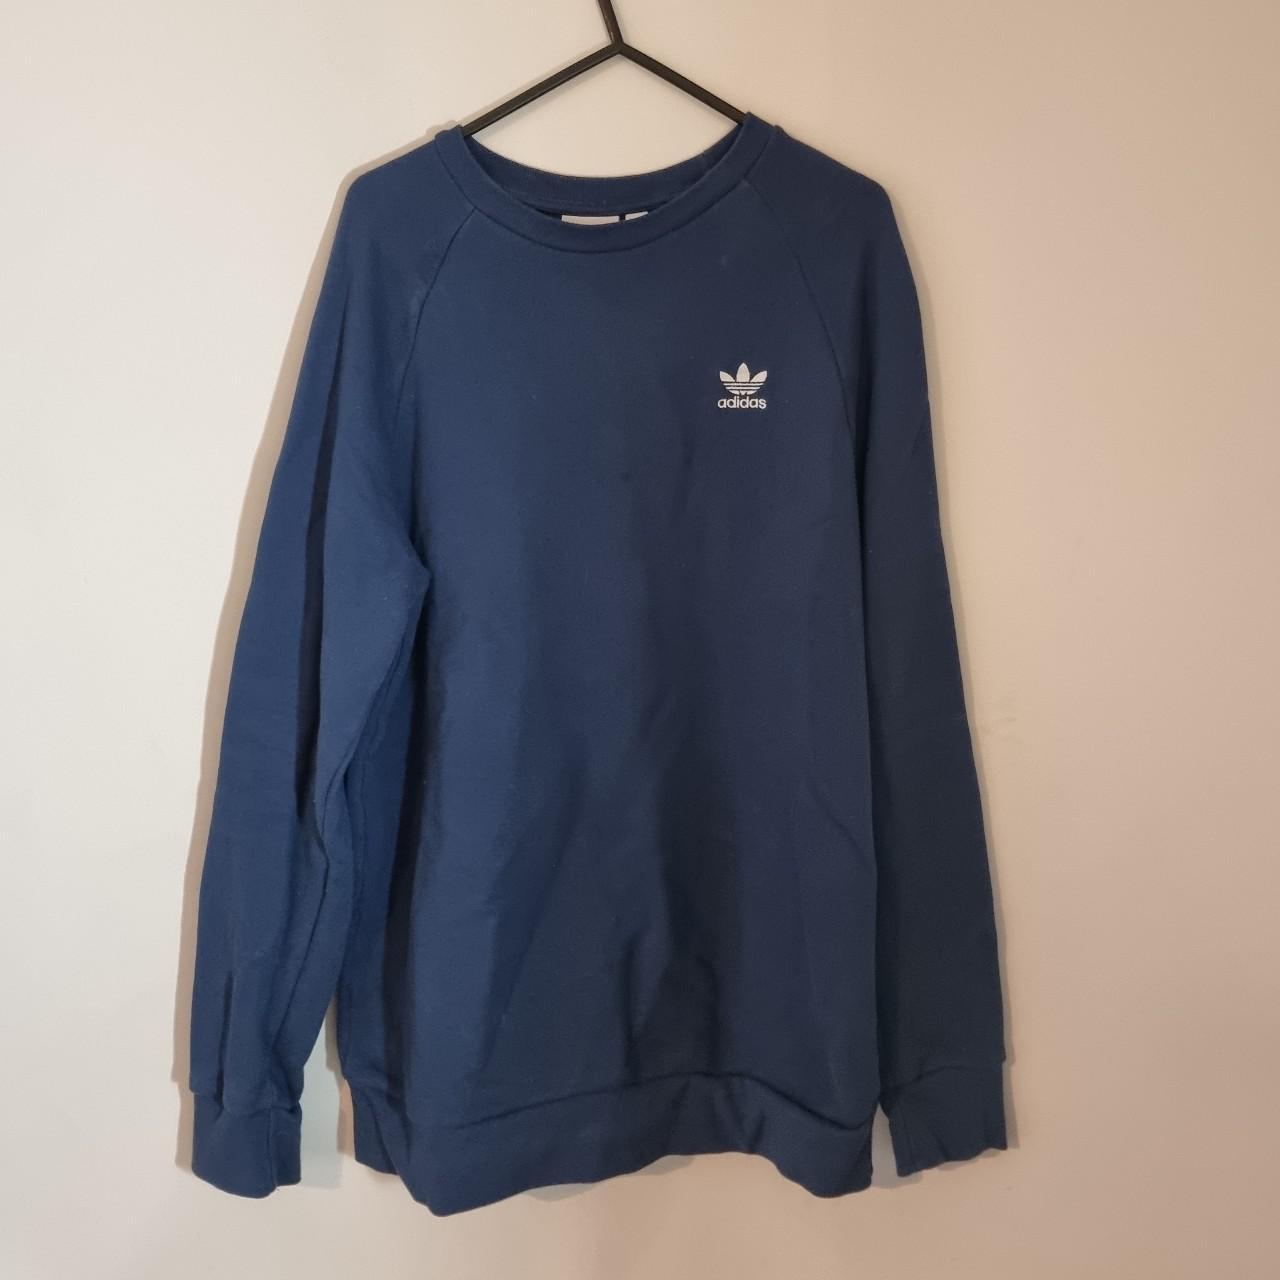 Adidas Blue Sweatshirt in Size S Only selling as... - Depop